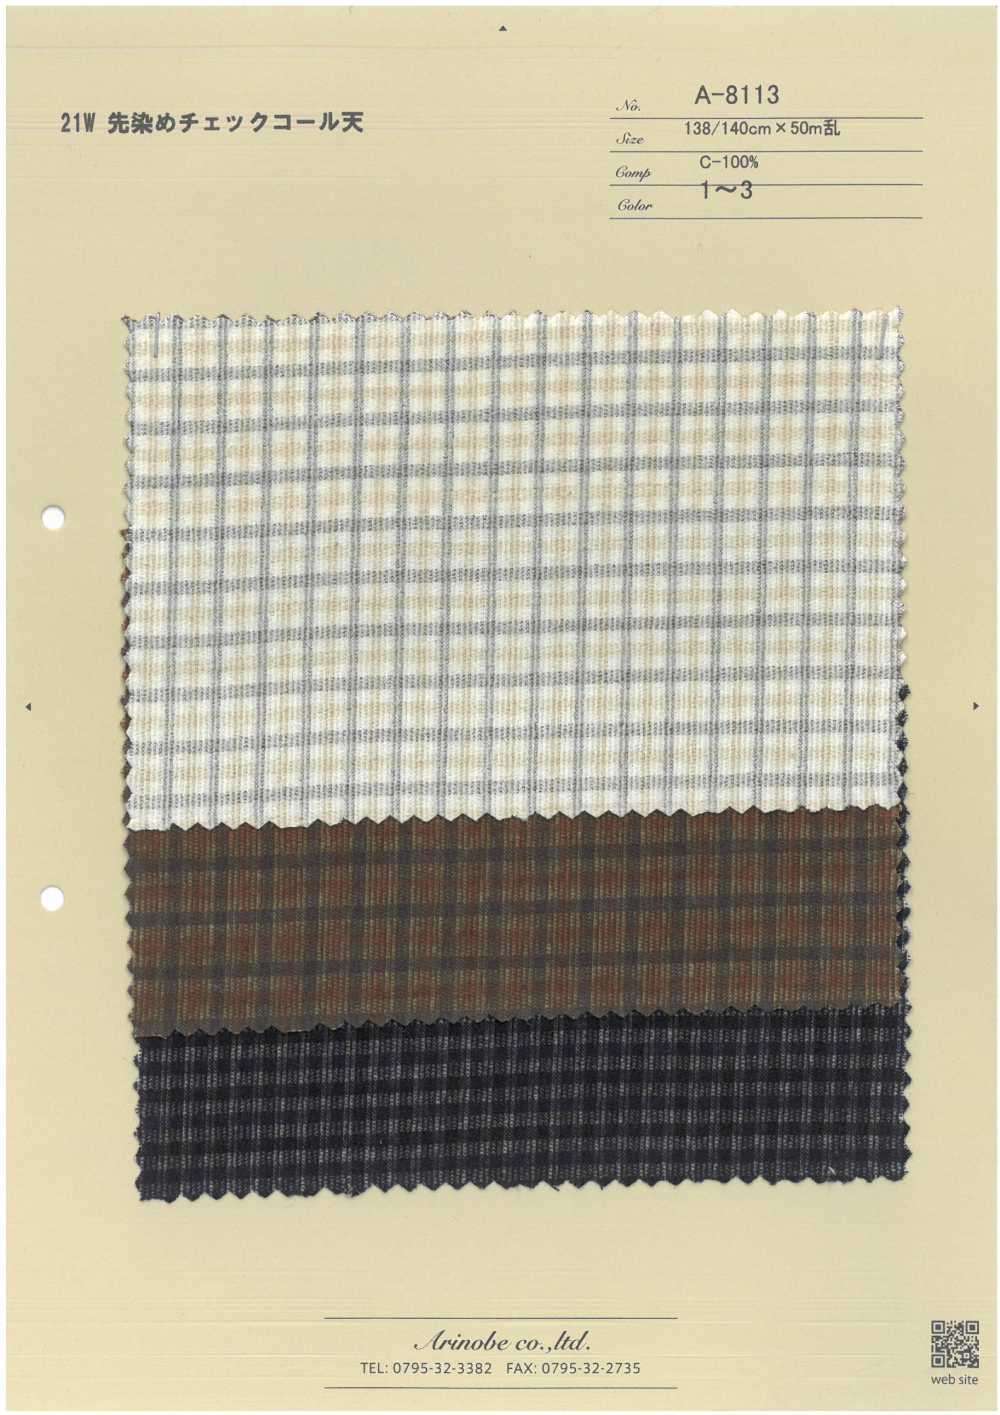 A-8113 21W Yarn Dyed Check Corduroy[Textile / Fabric] ARINOBE CO., LTD.